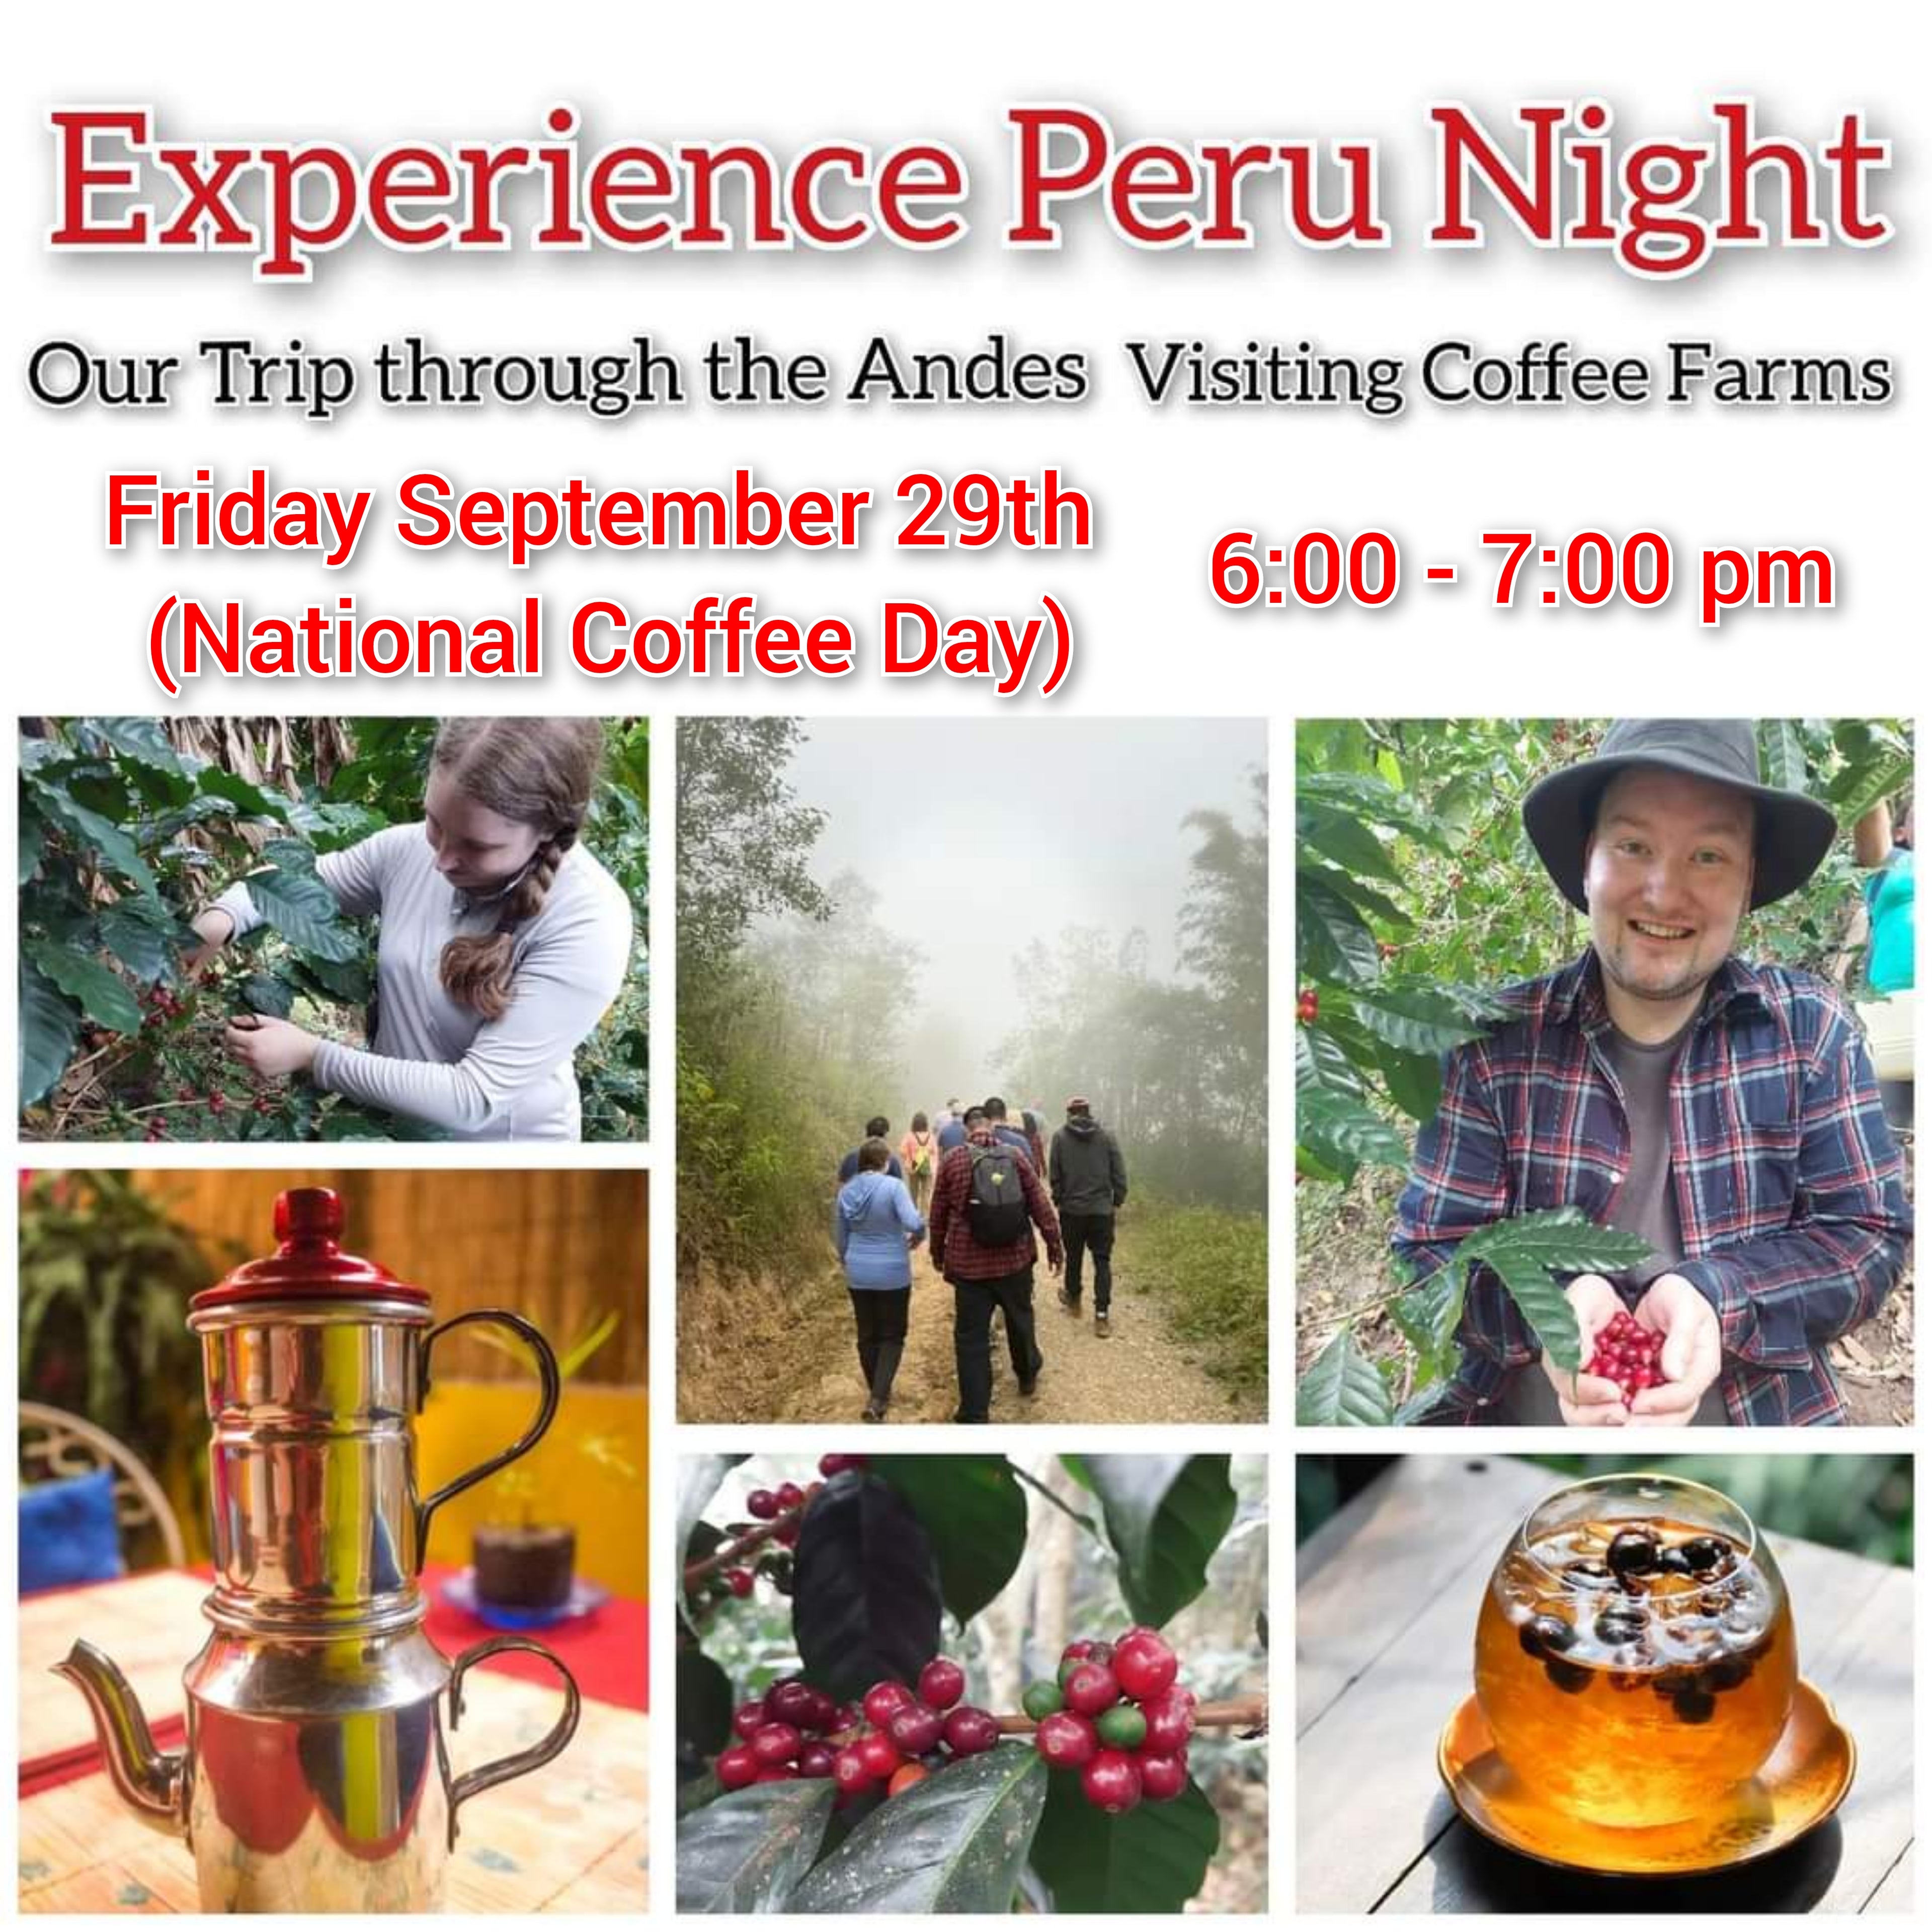 Experience Peru Coffee Night - Tickets